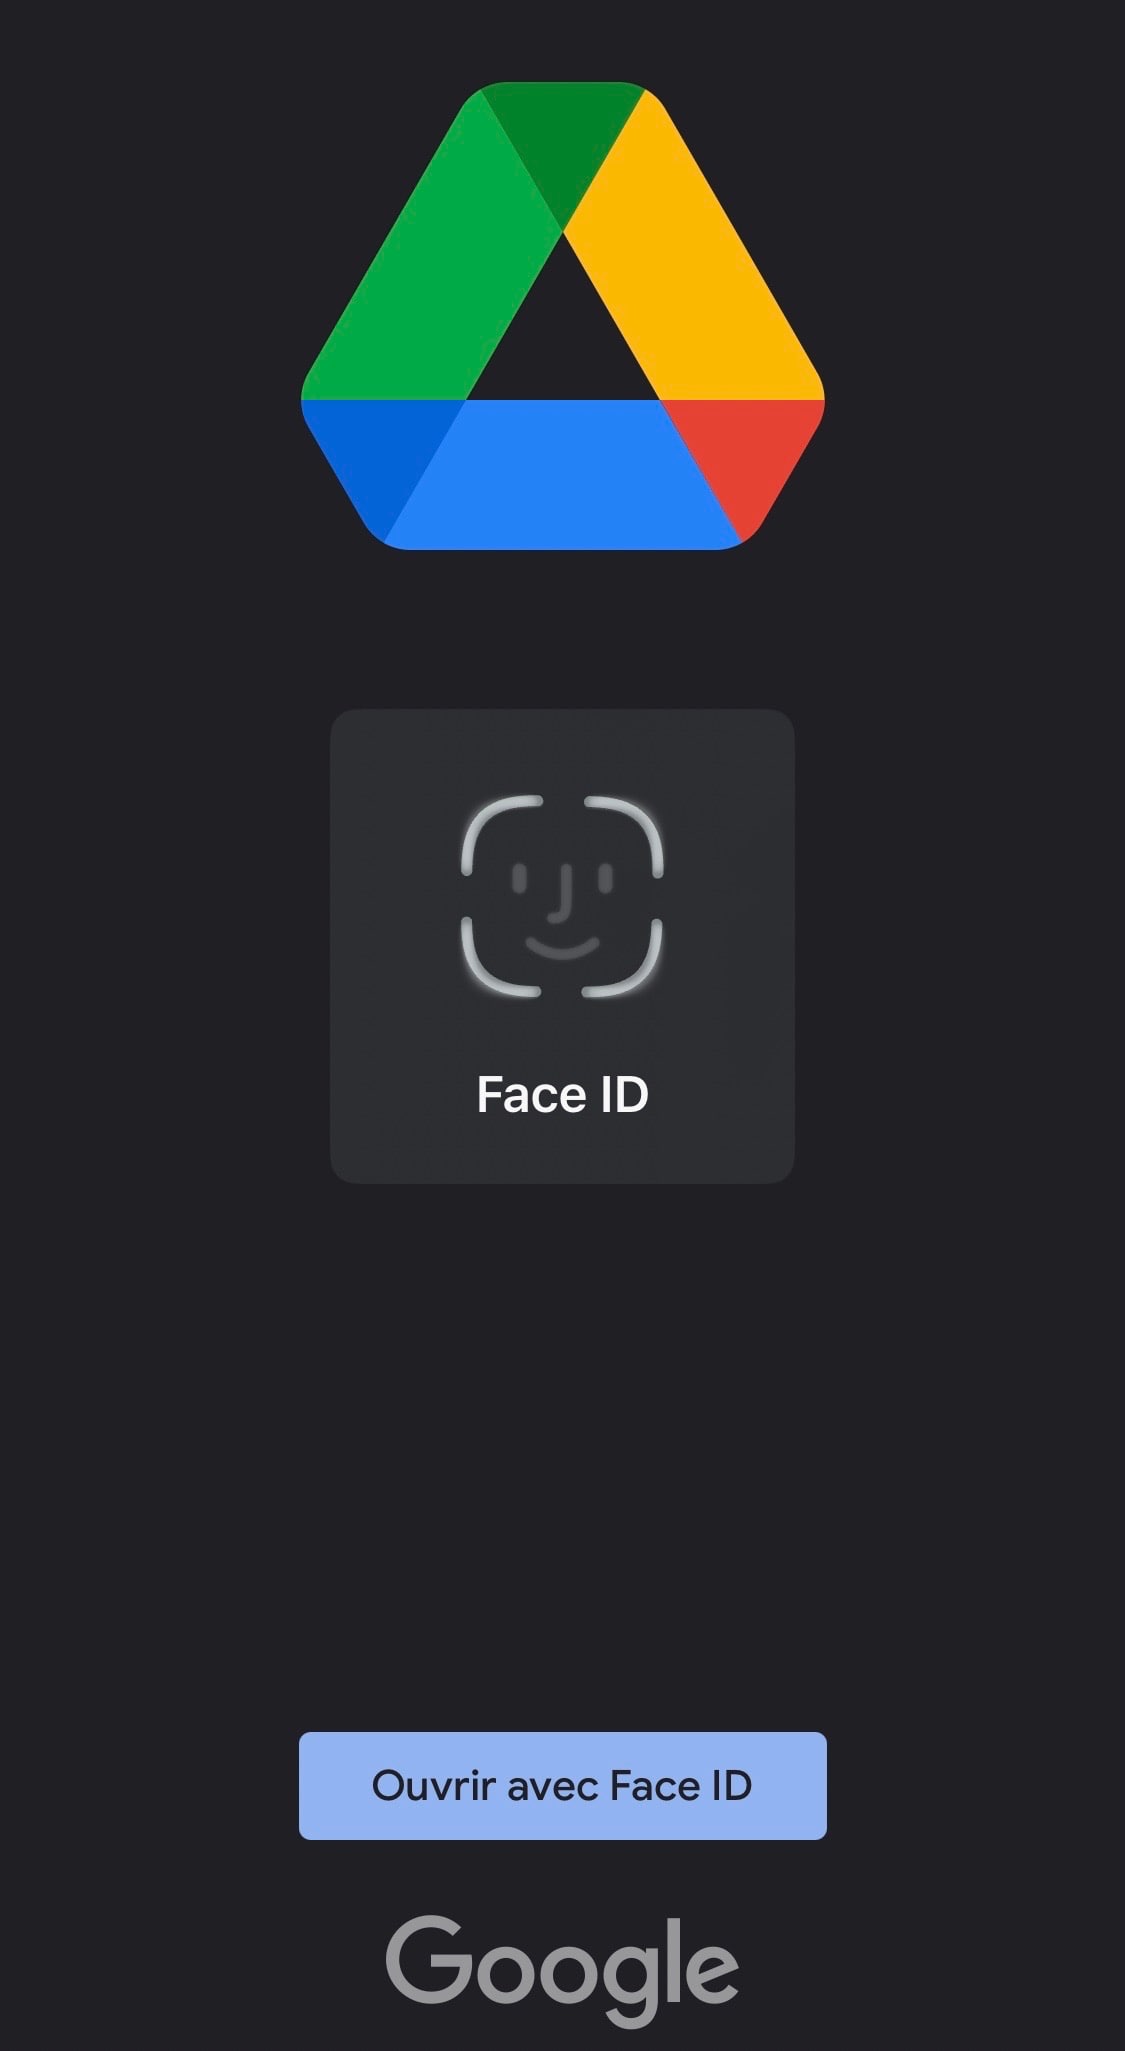 Google Drive Face ID